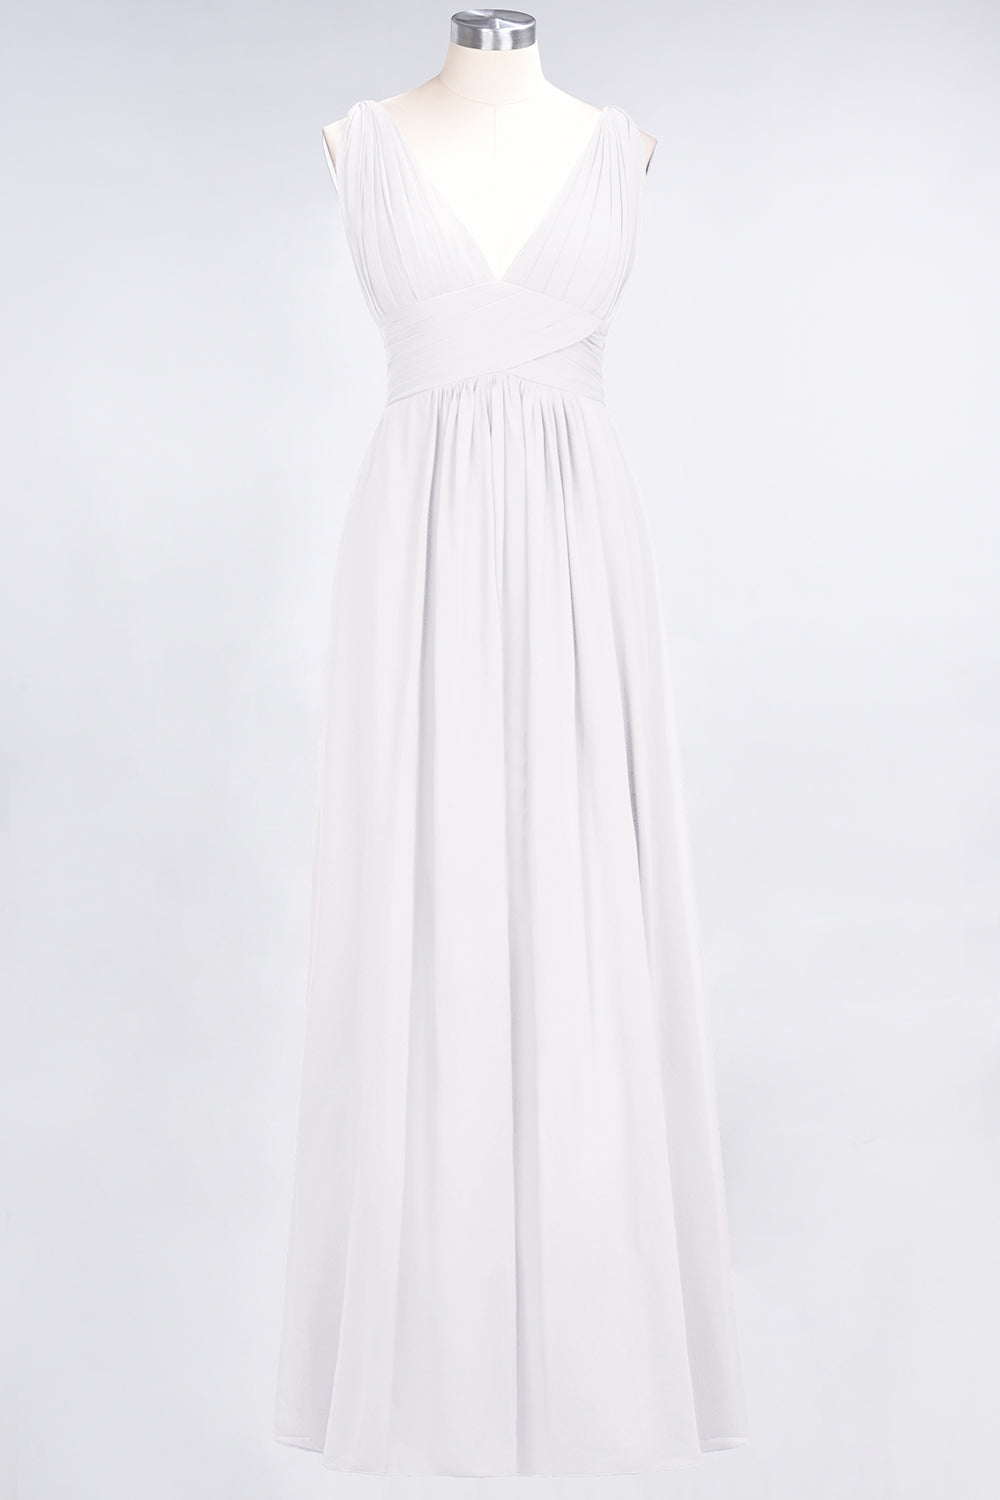 Elegant V-Neck Burgundy Chiffon Affordable Bridesmaid Dress with Ruffle-27dress